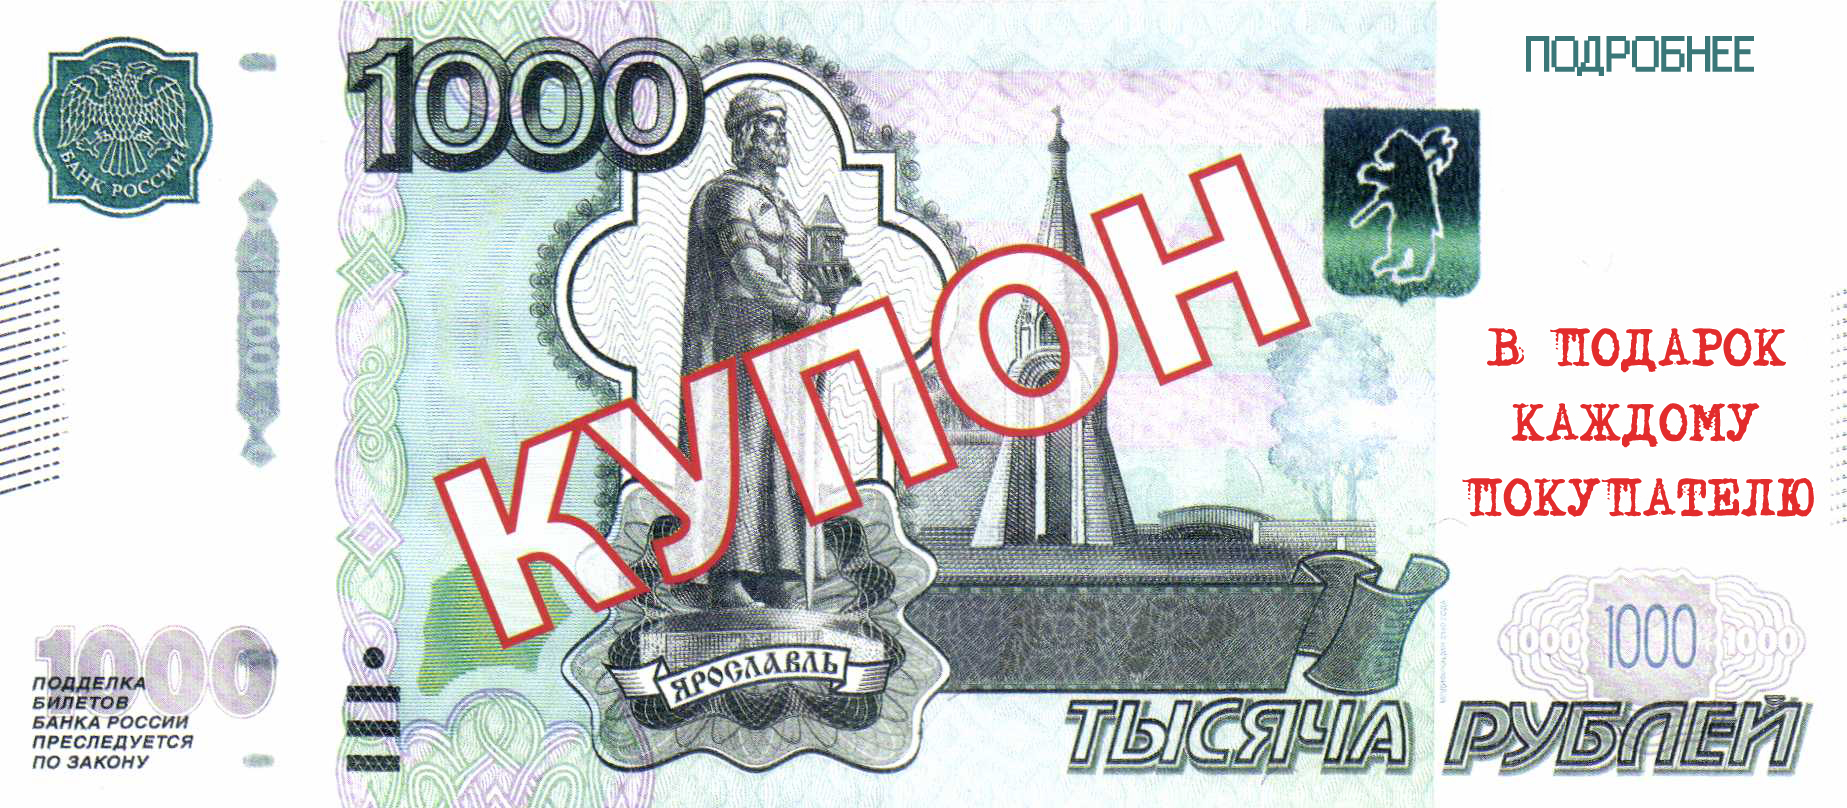 Steam 1000 рублей фото 104